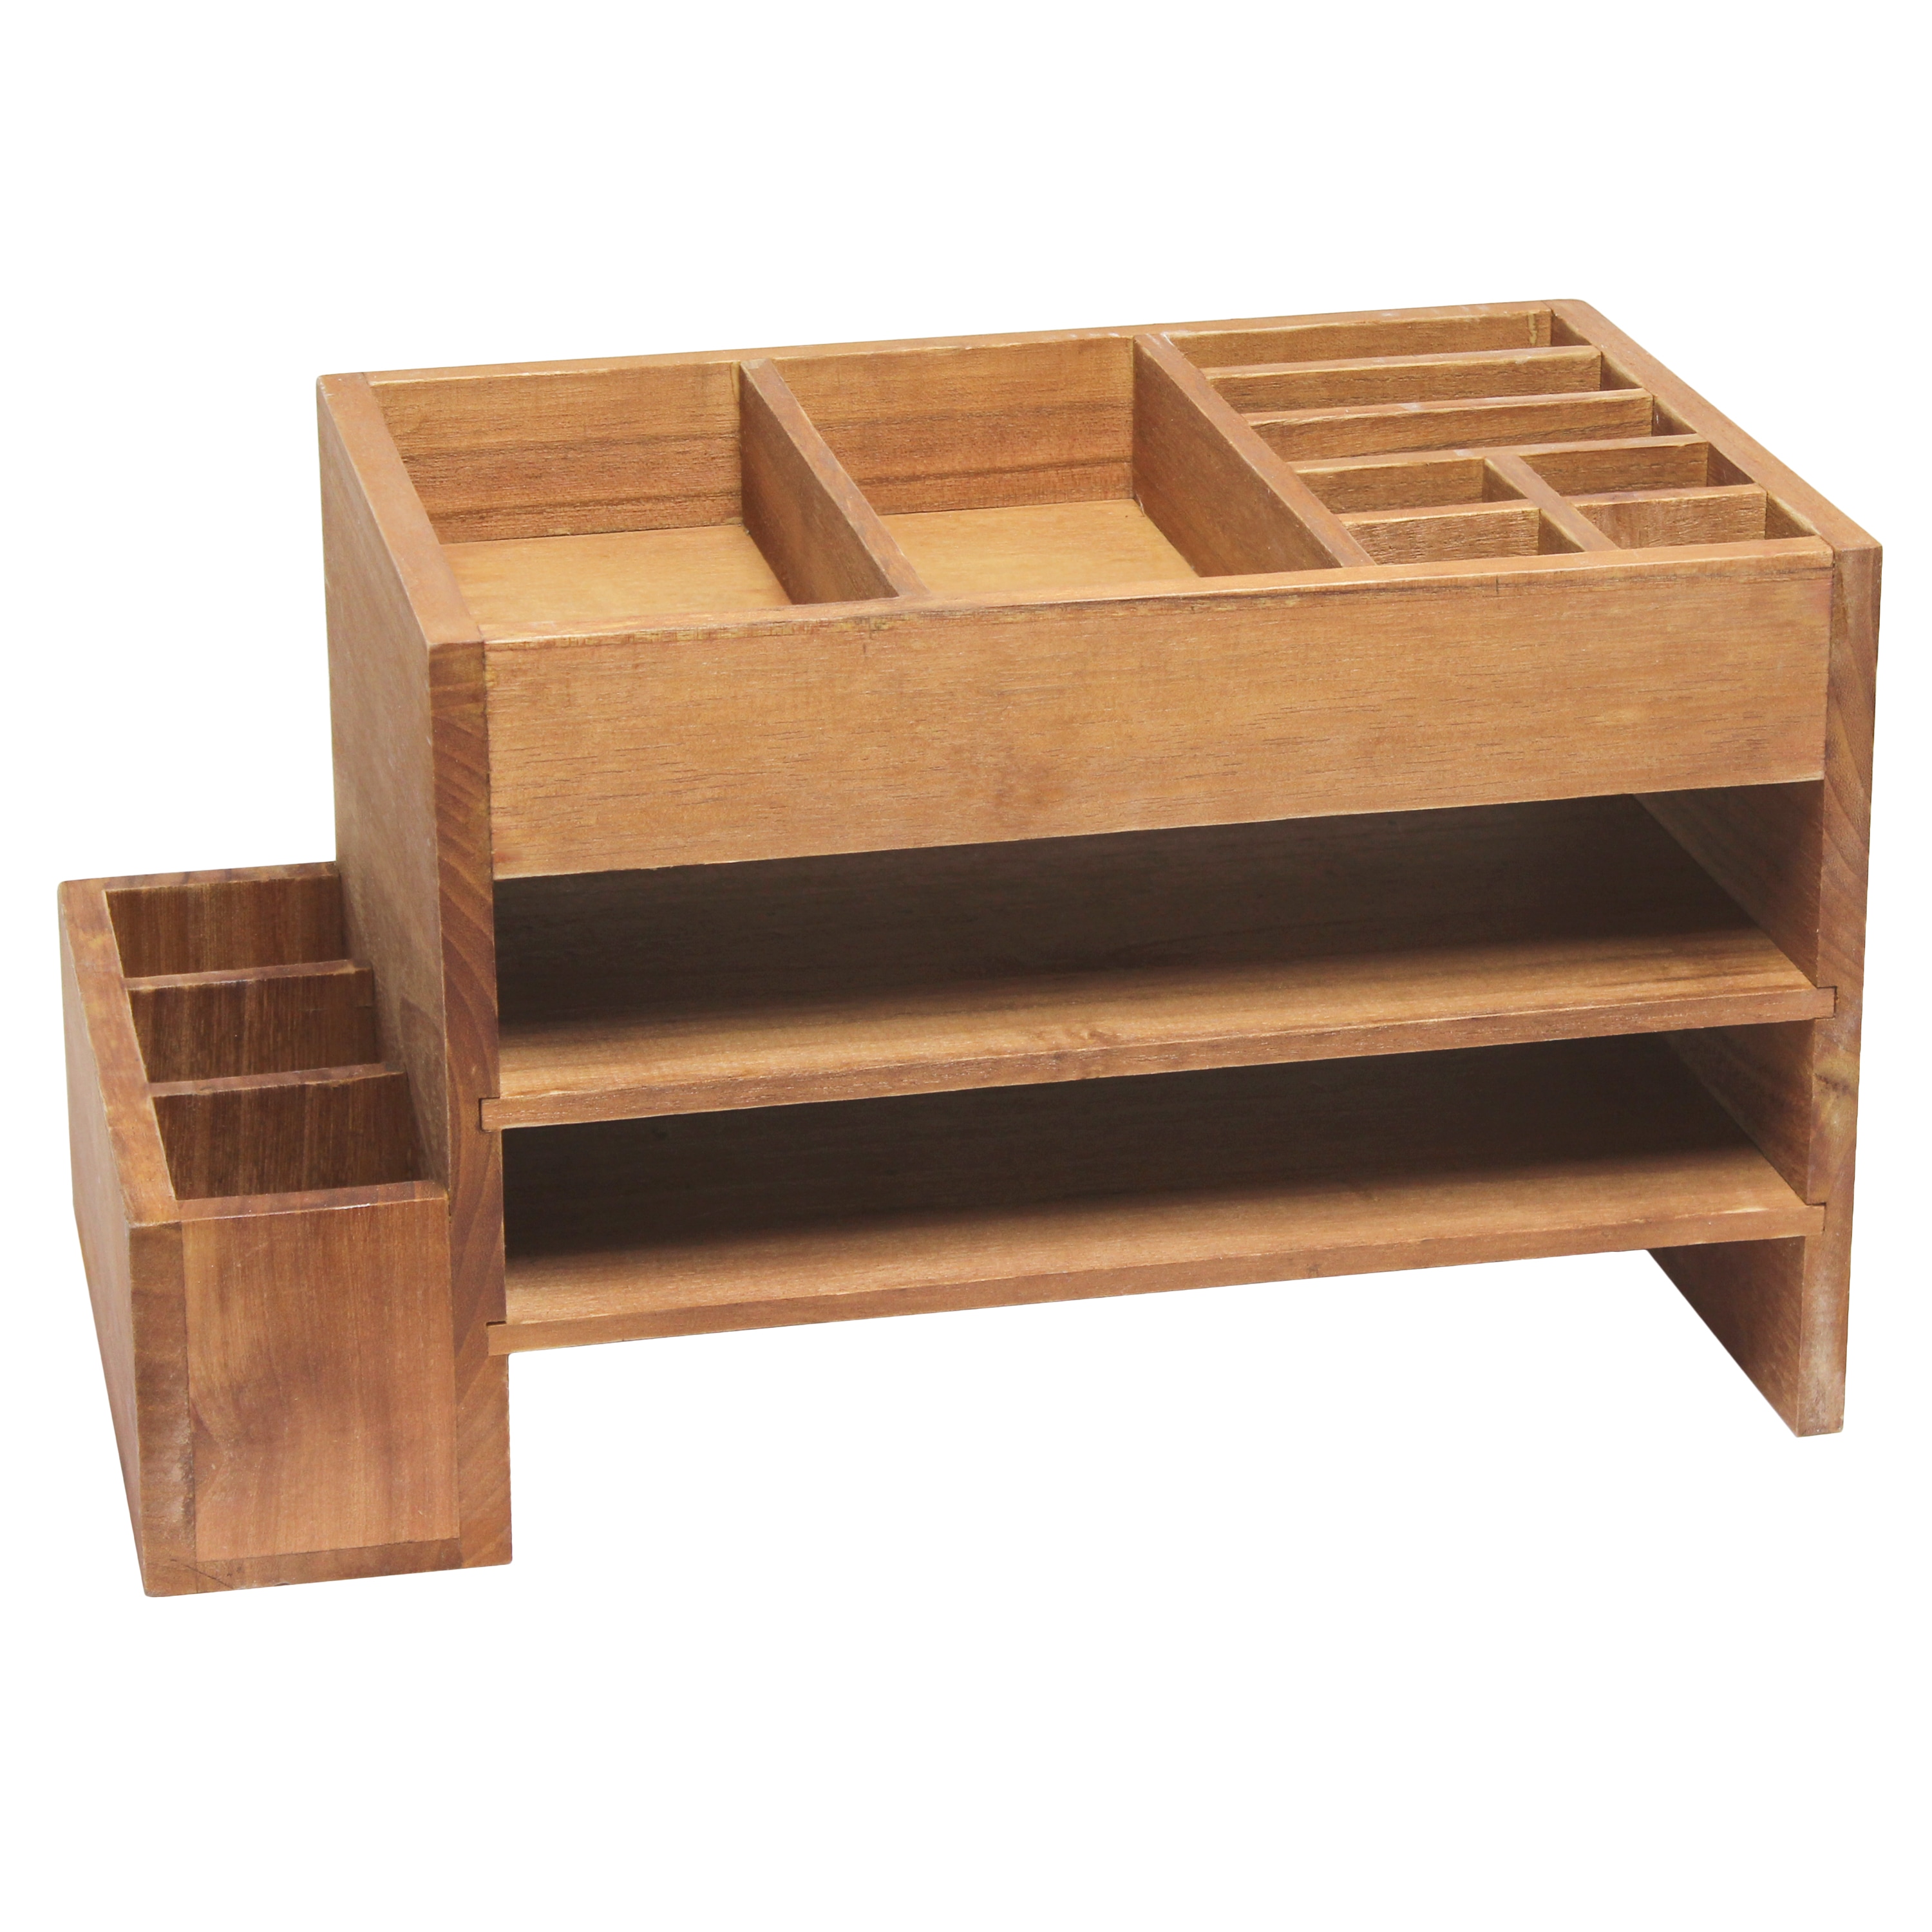 Details about   Wooden Organizer Desktop with Block Calendar ... Sorter Countertop Organizer 